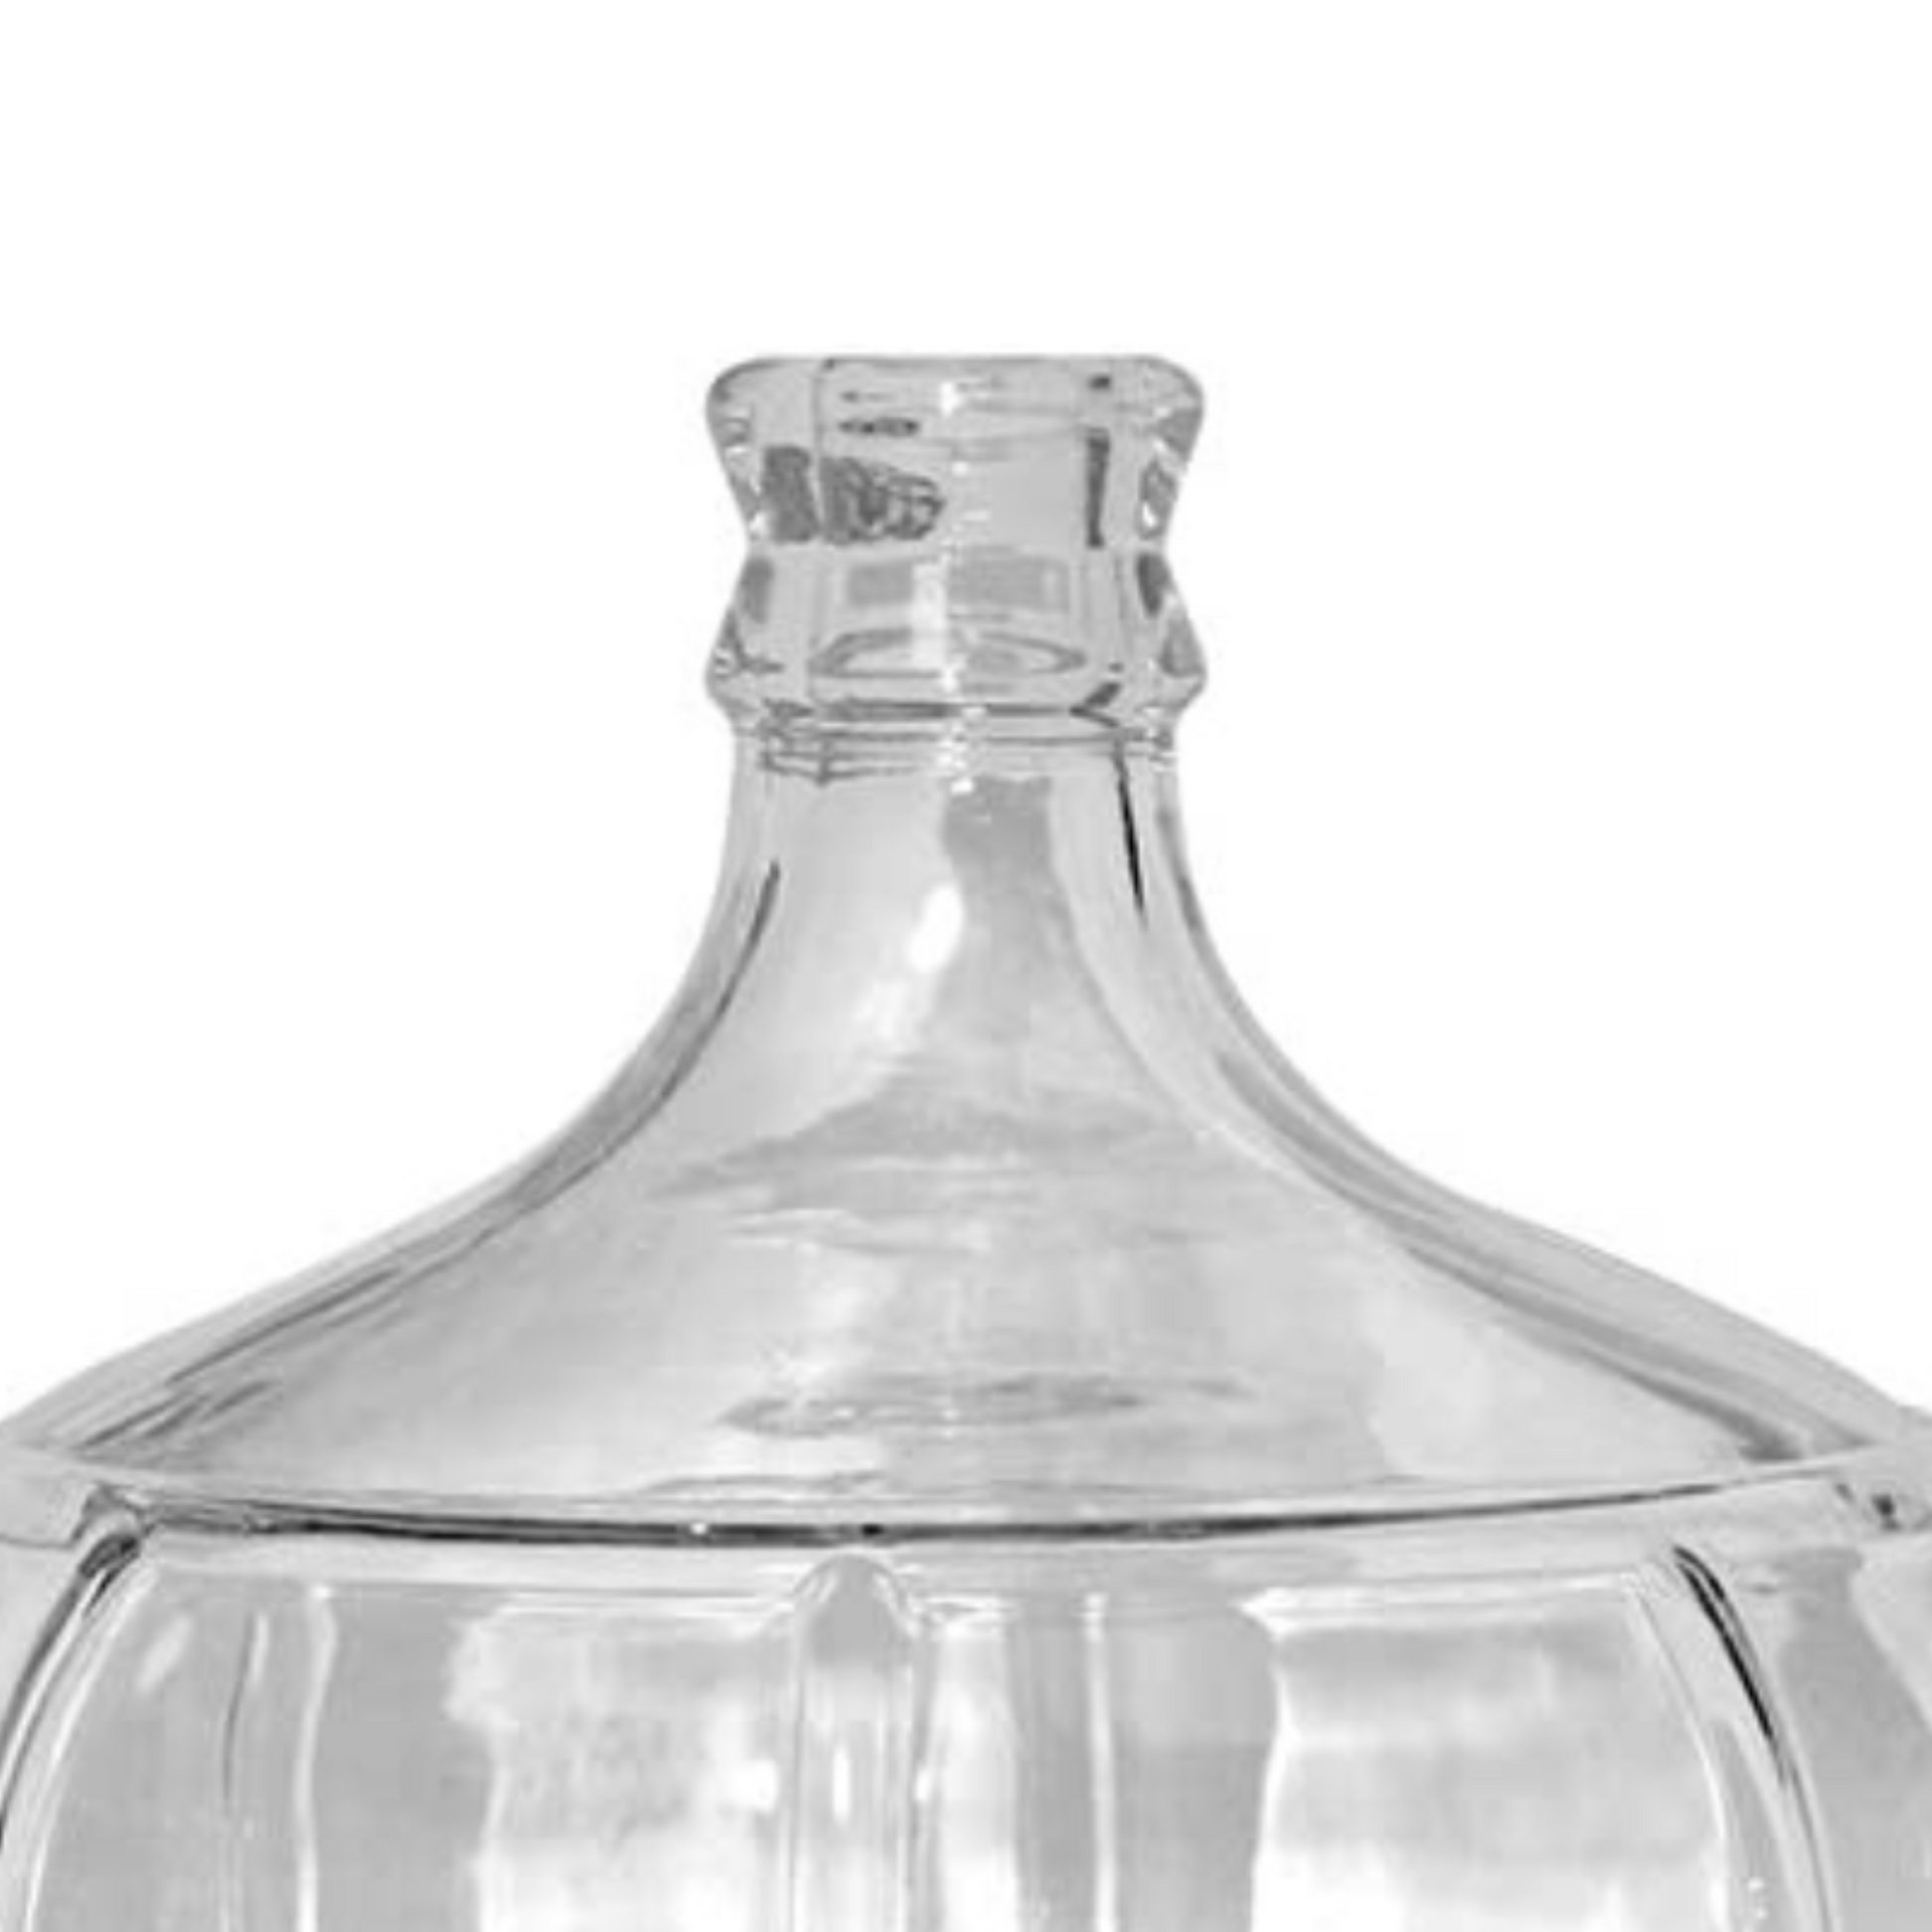 Reusable 5-Gallon Glass Bottle Empty for Your Favorite Beverages